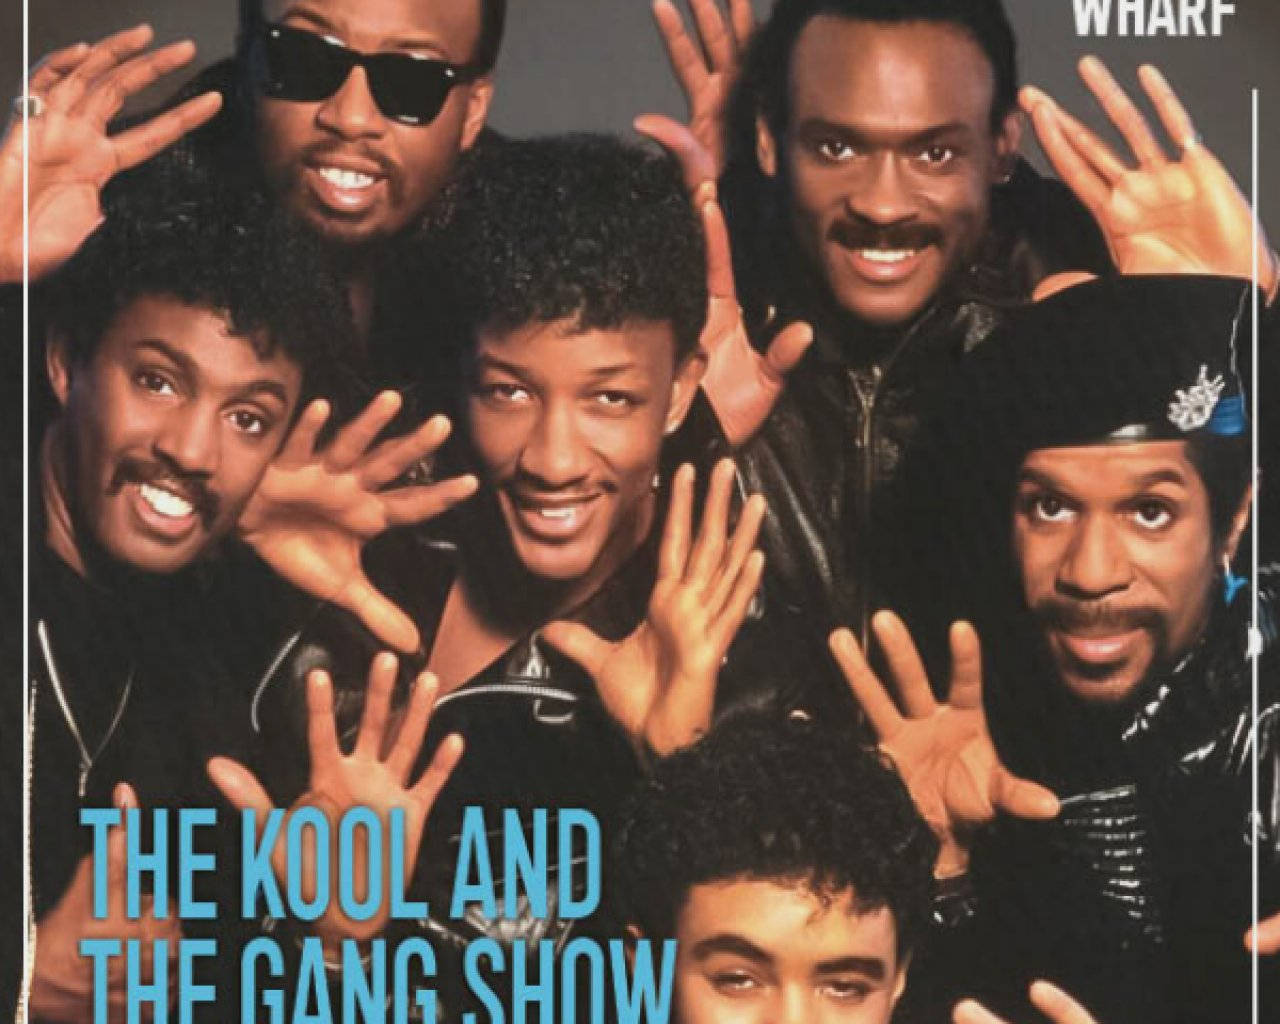 Kool And The Gang genoptrykt album cover wallpaper Wallpaper